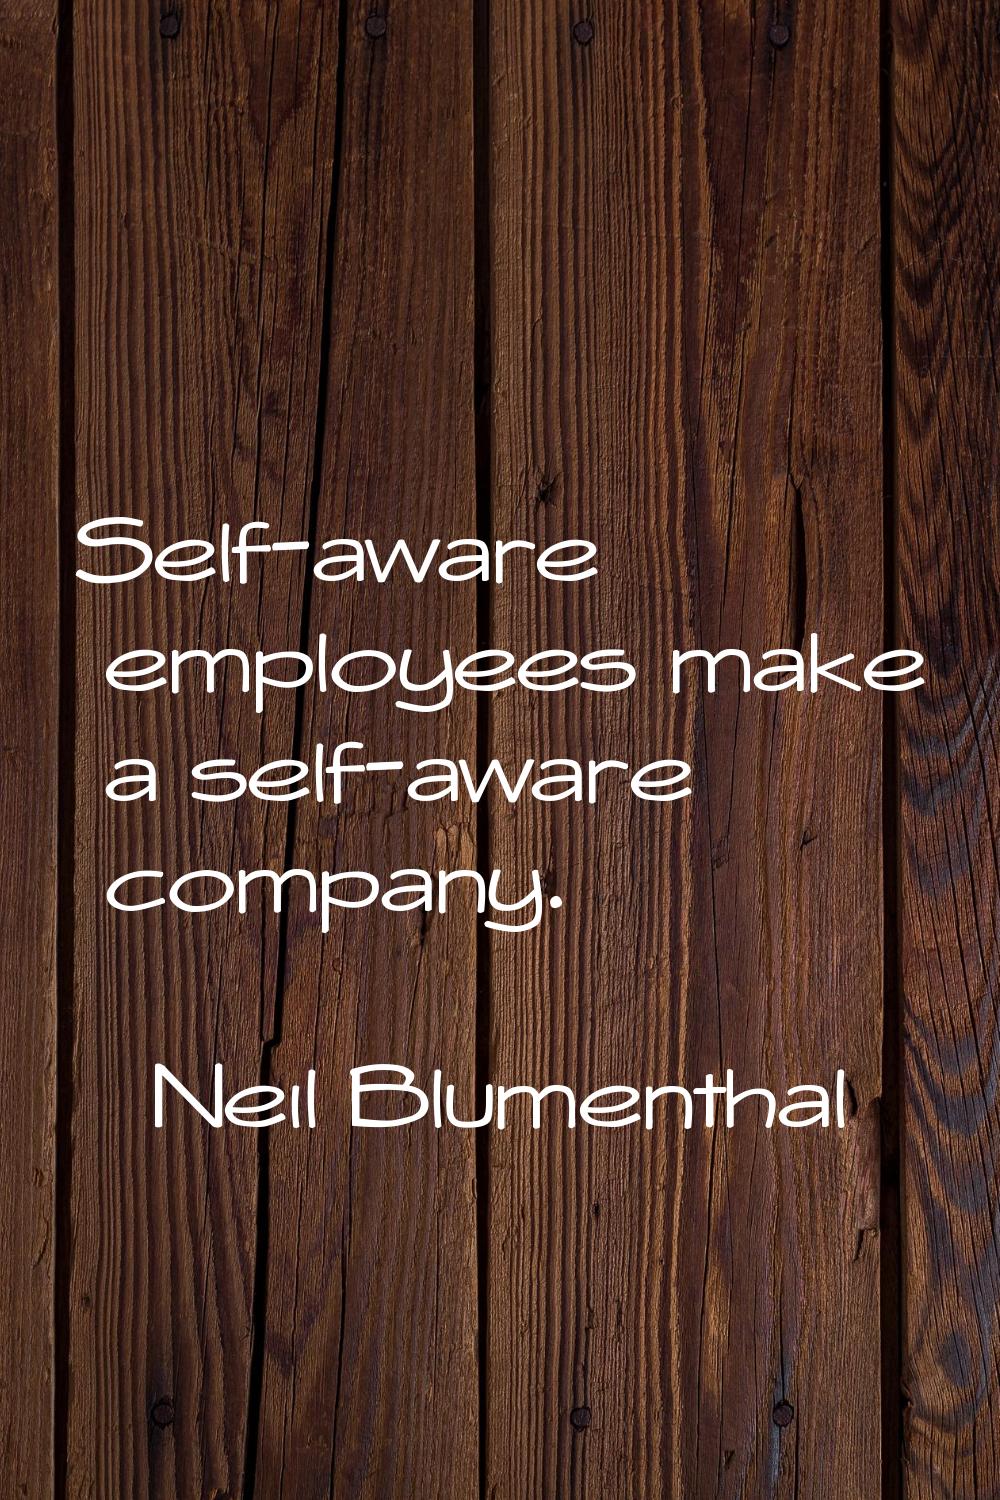 Self-aware employees make a self-aware company.